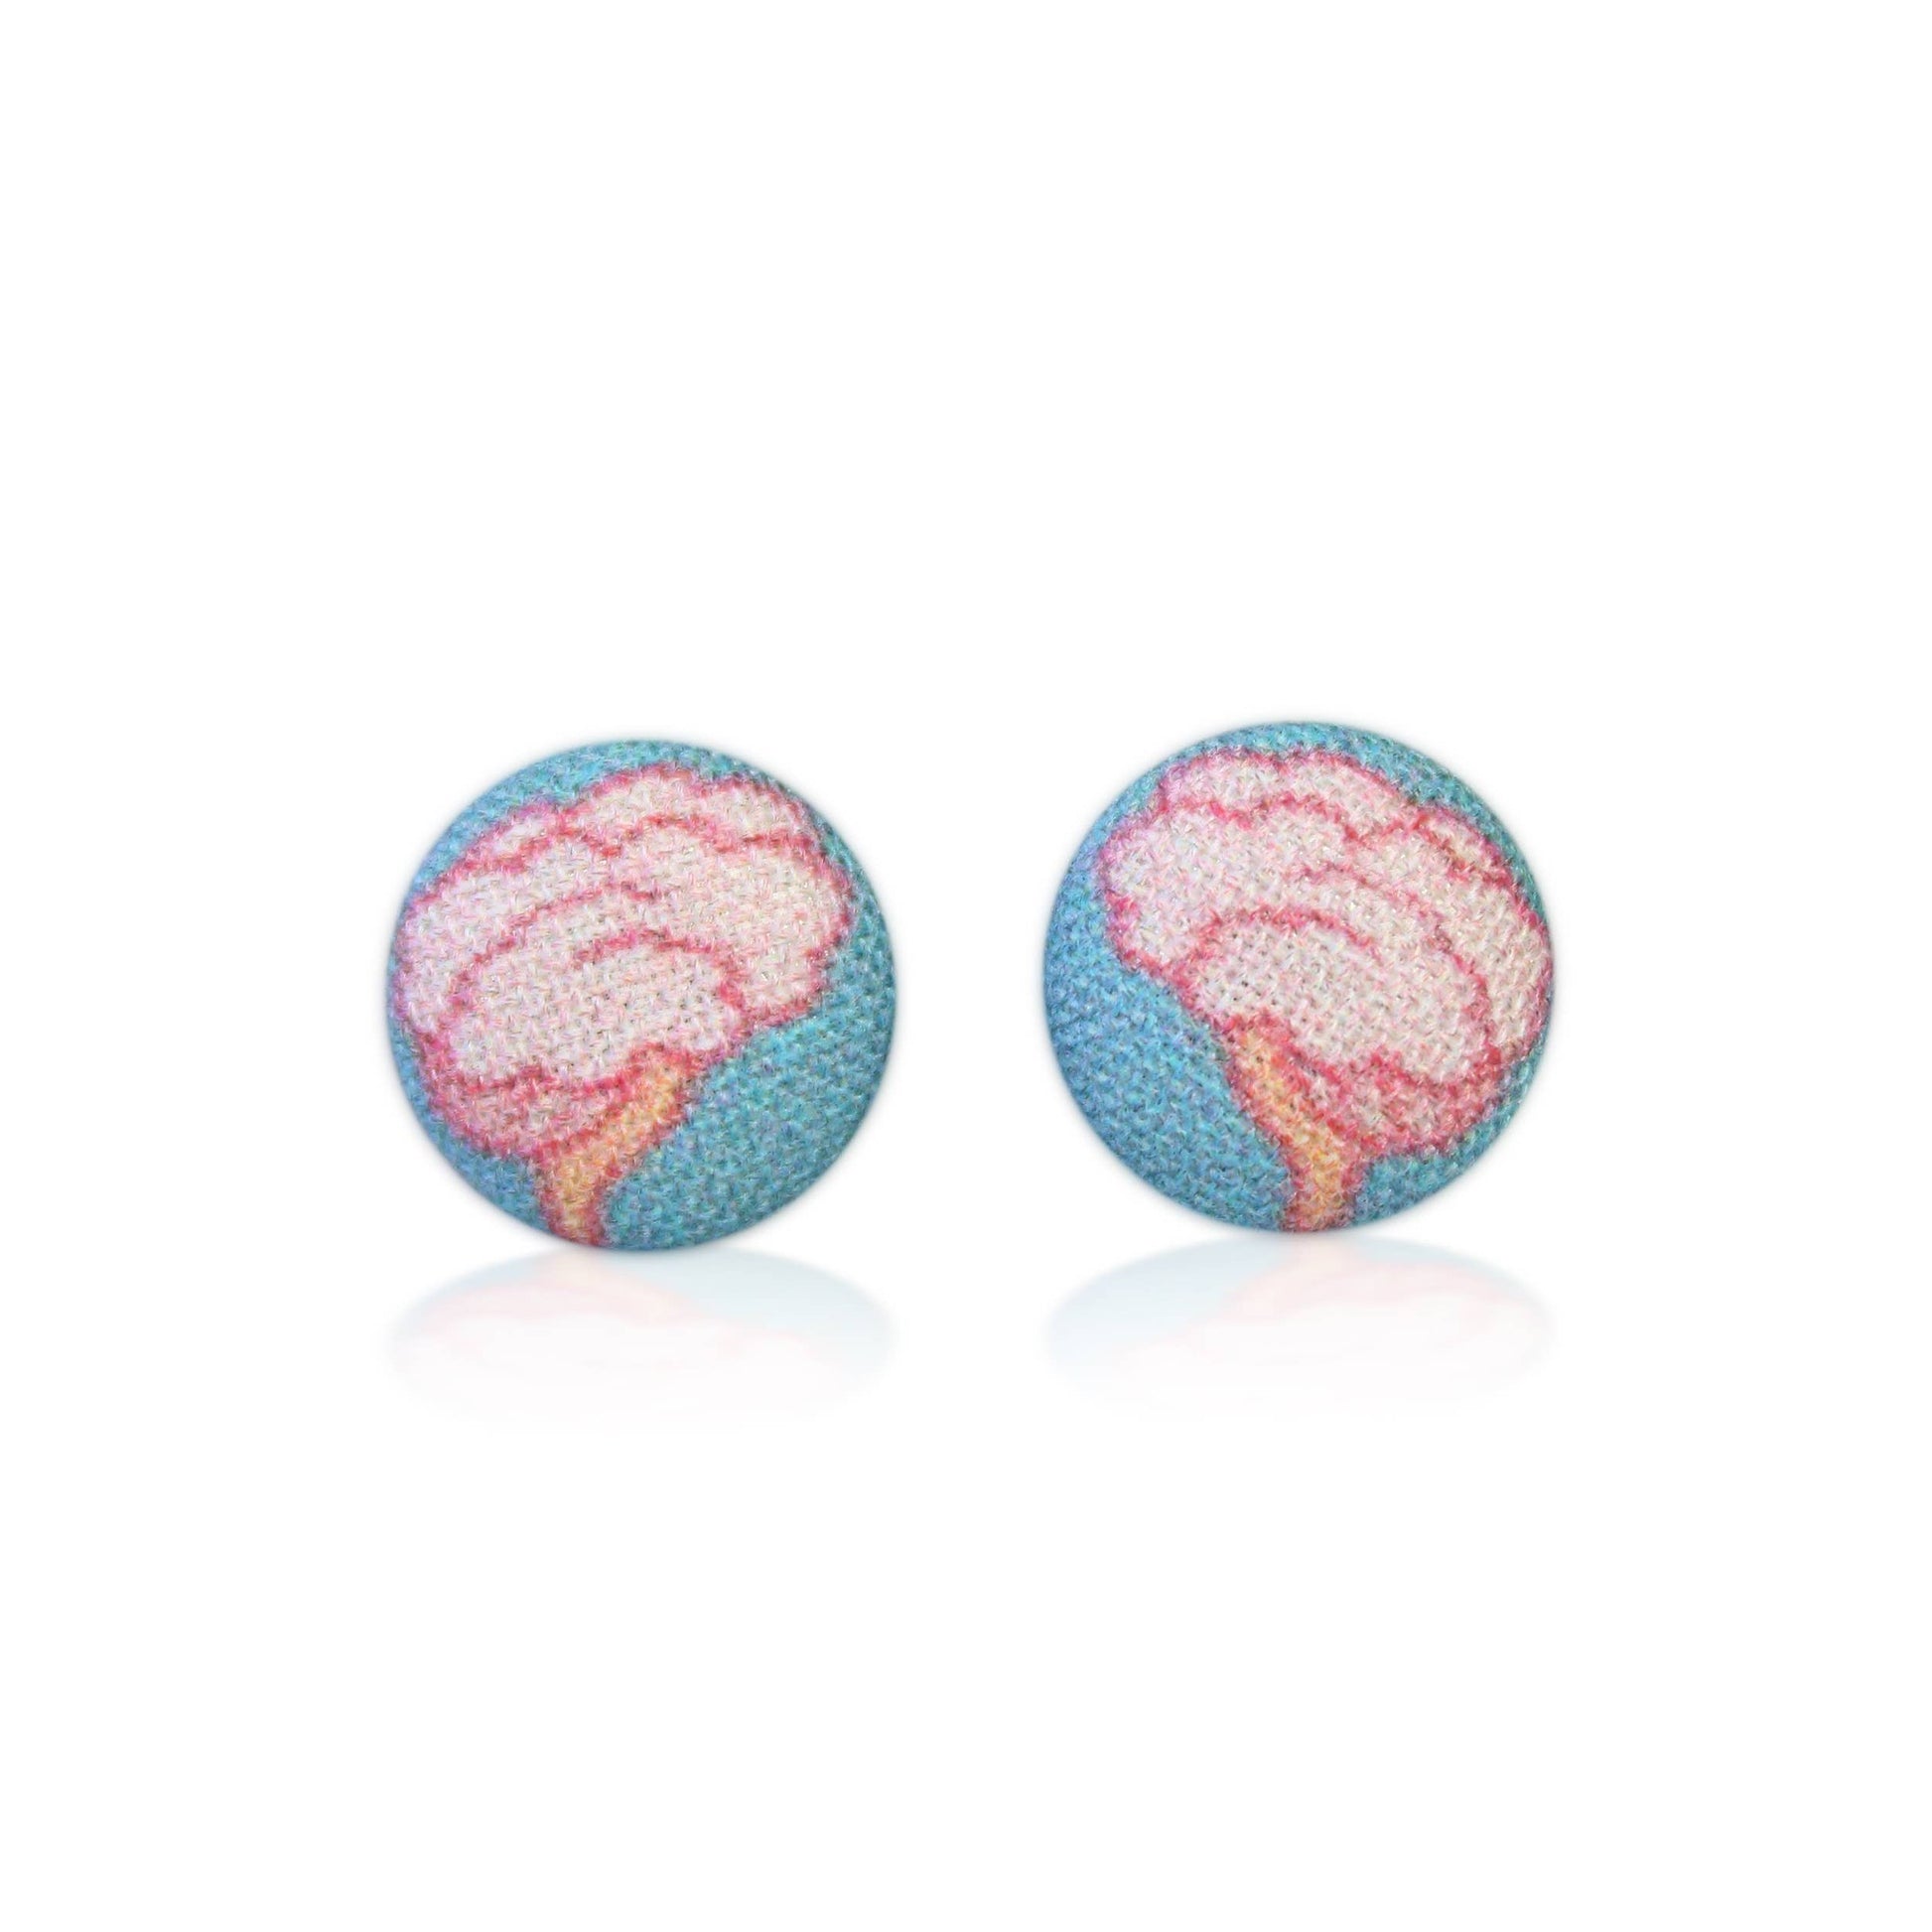 Brain Fabric Button Earrings | Handmade in the US